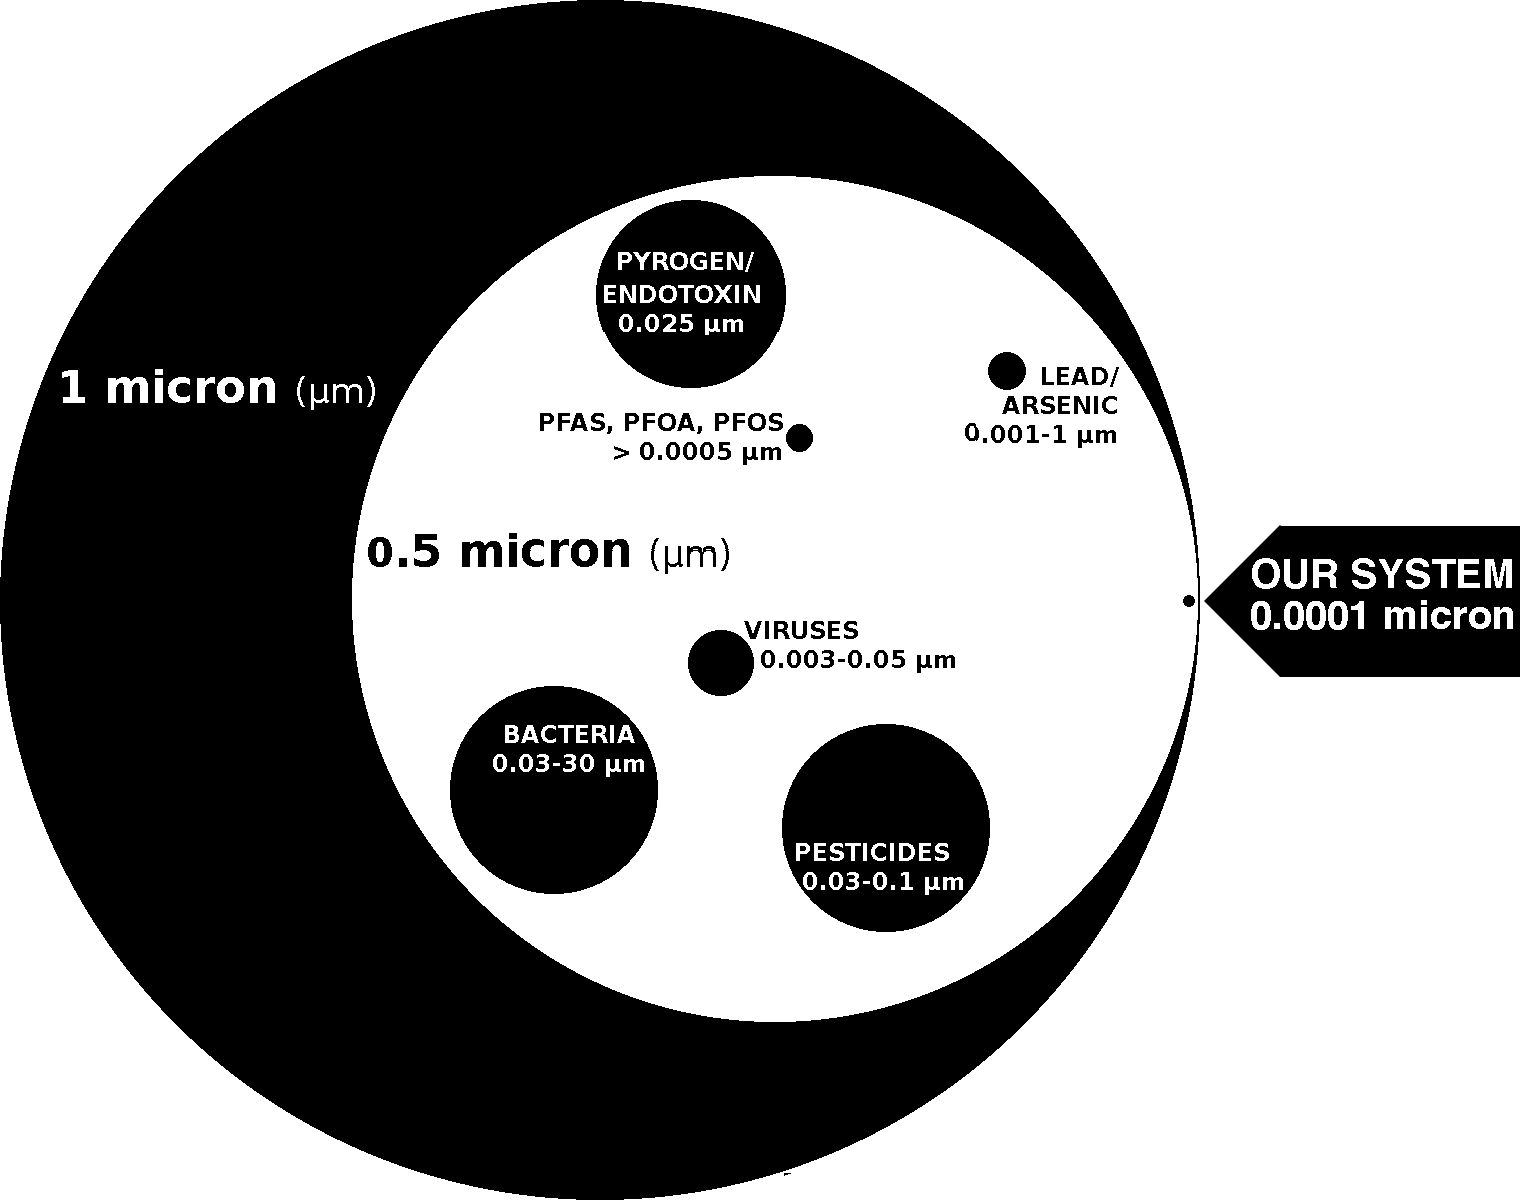 Image of micron size comparison